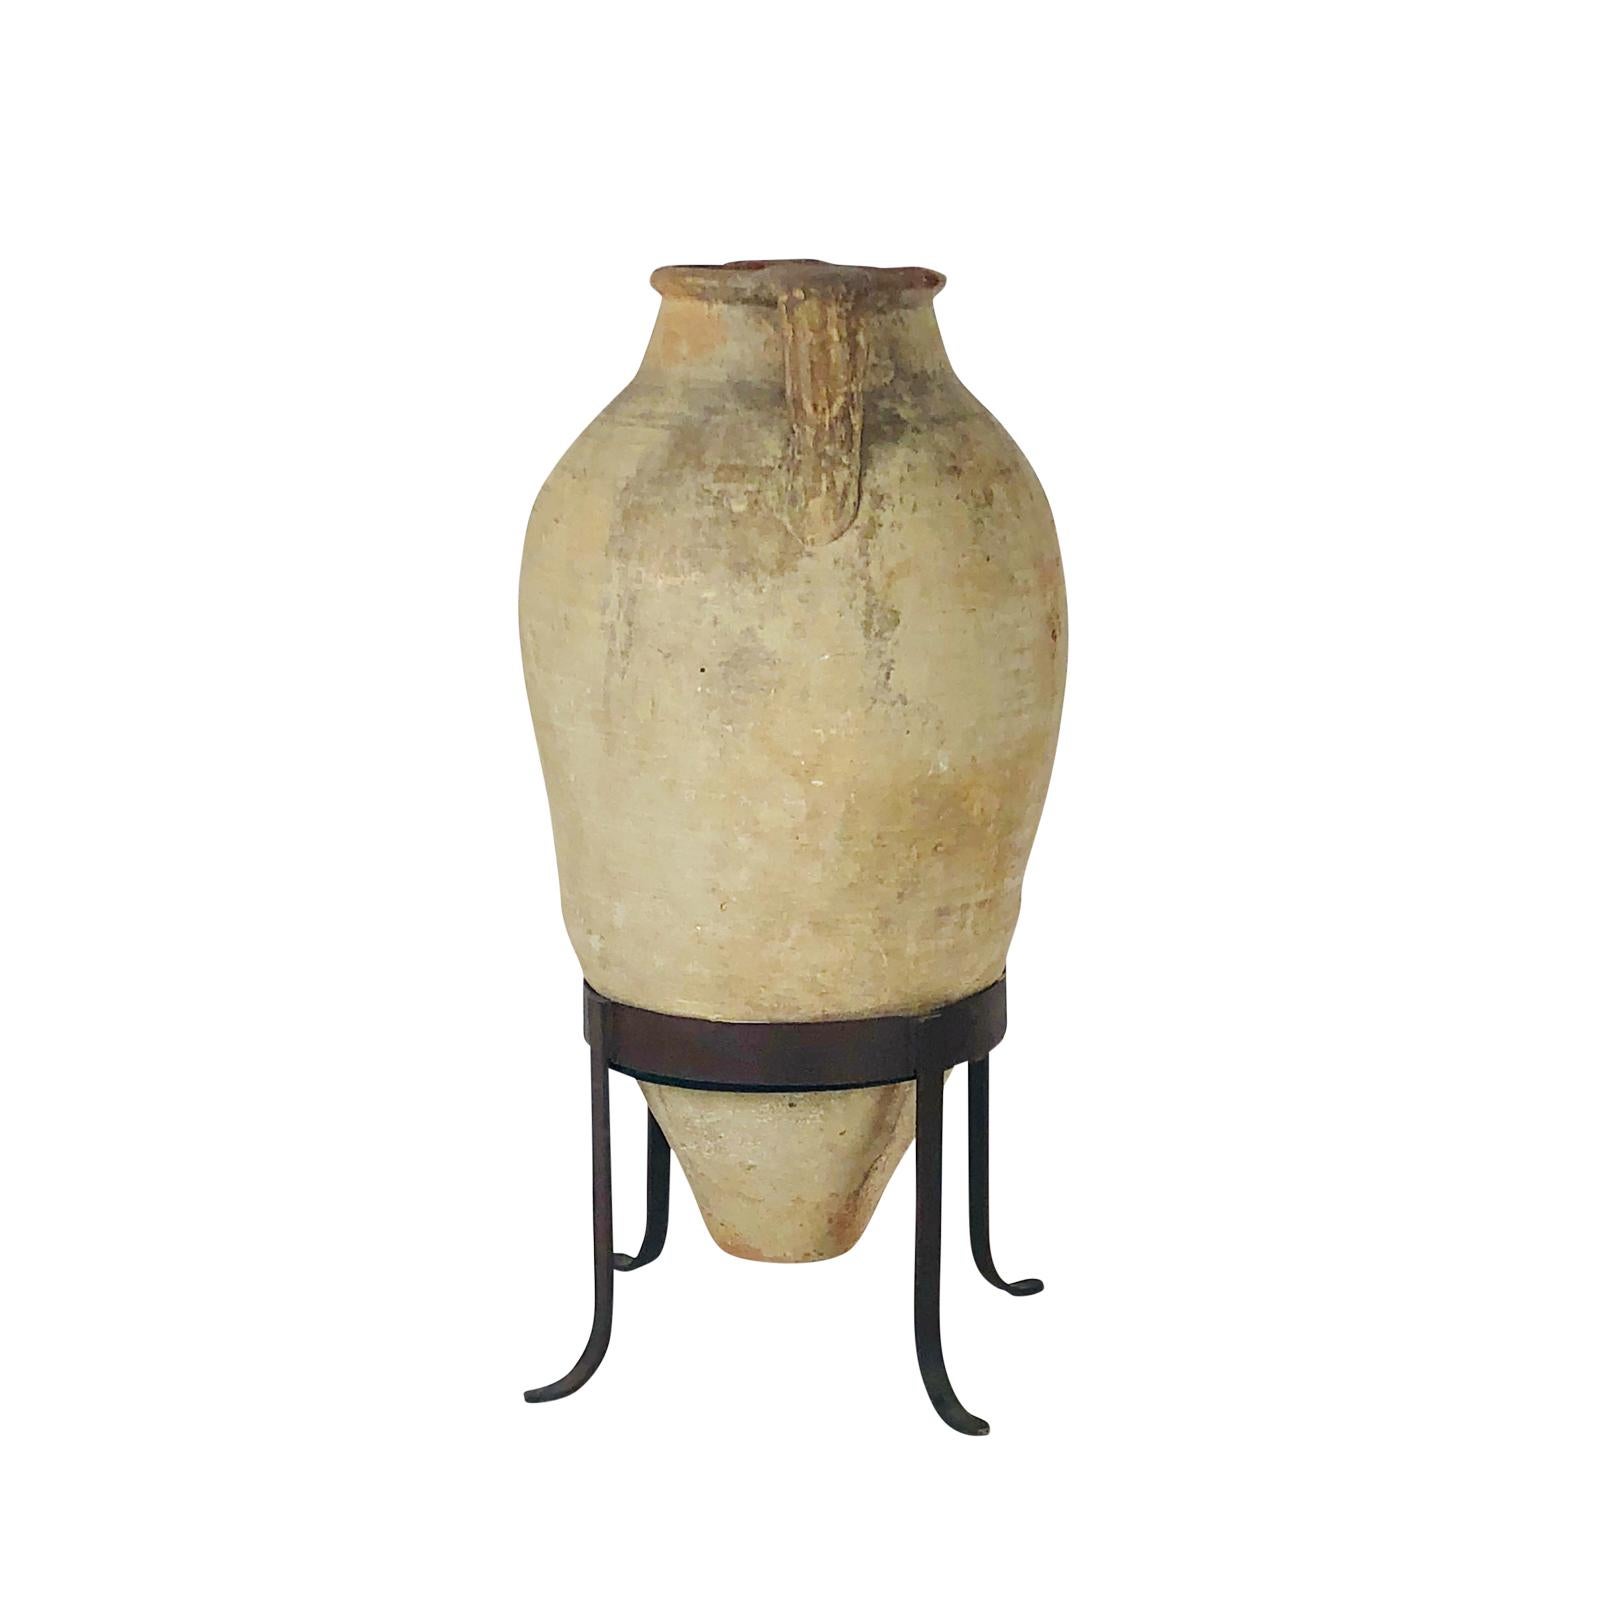 Classical Roman Large and Tall Amphora, circa 300 AD